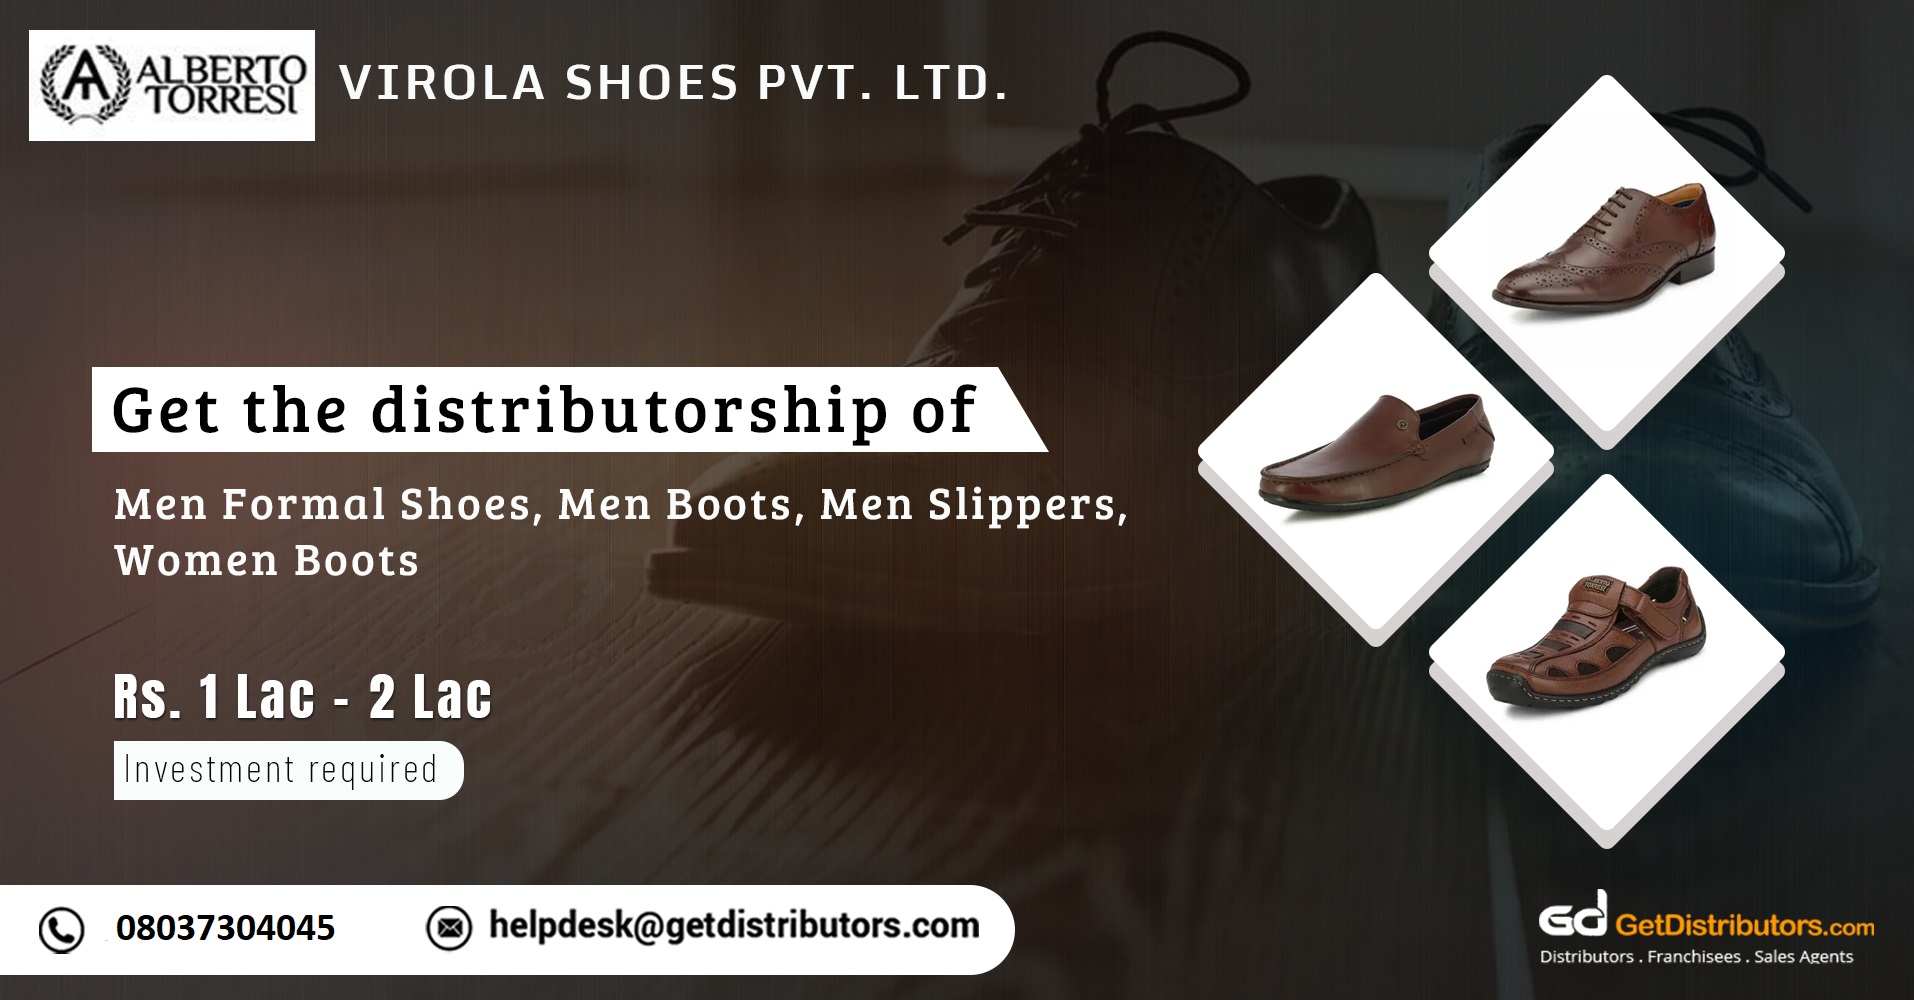 Distributorship of a wide range of footwear for men and women